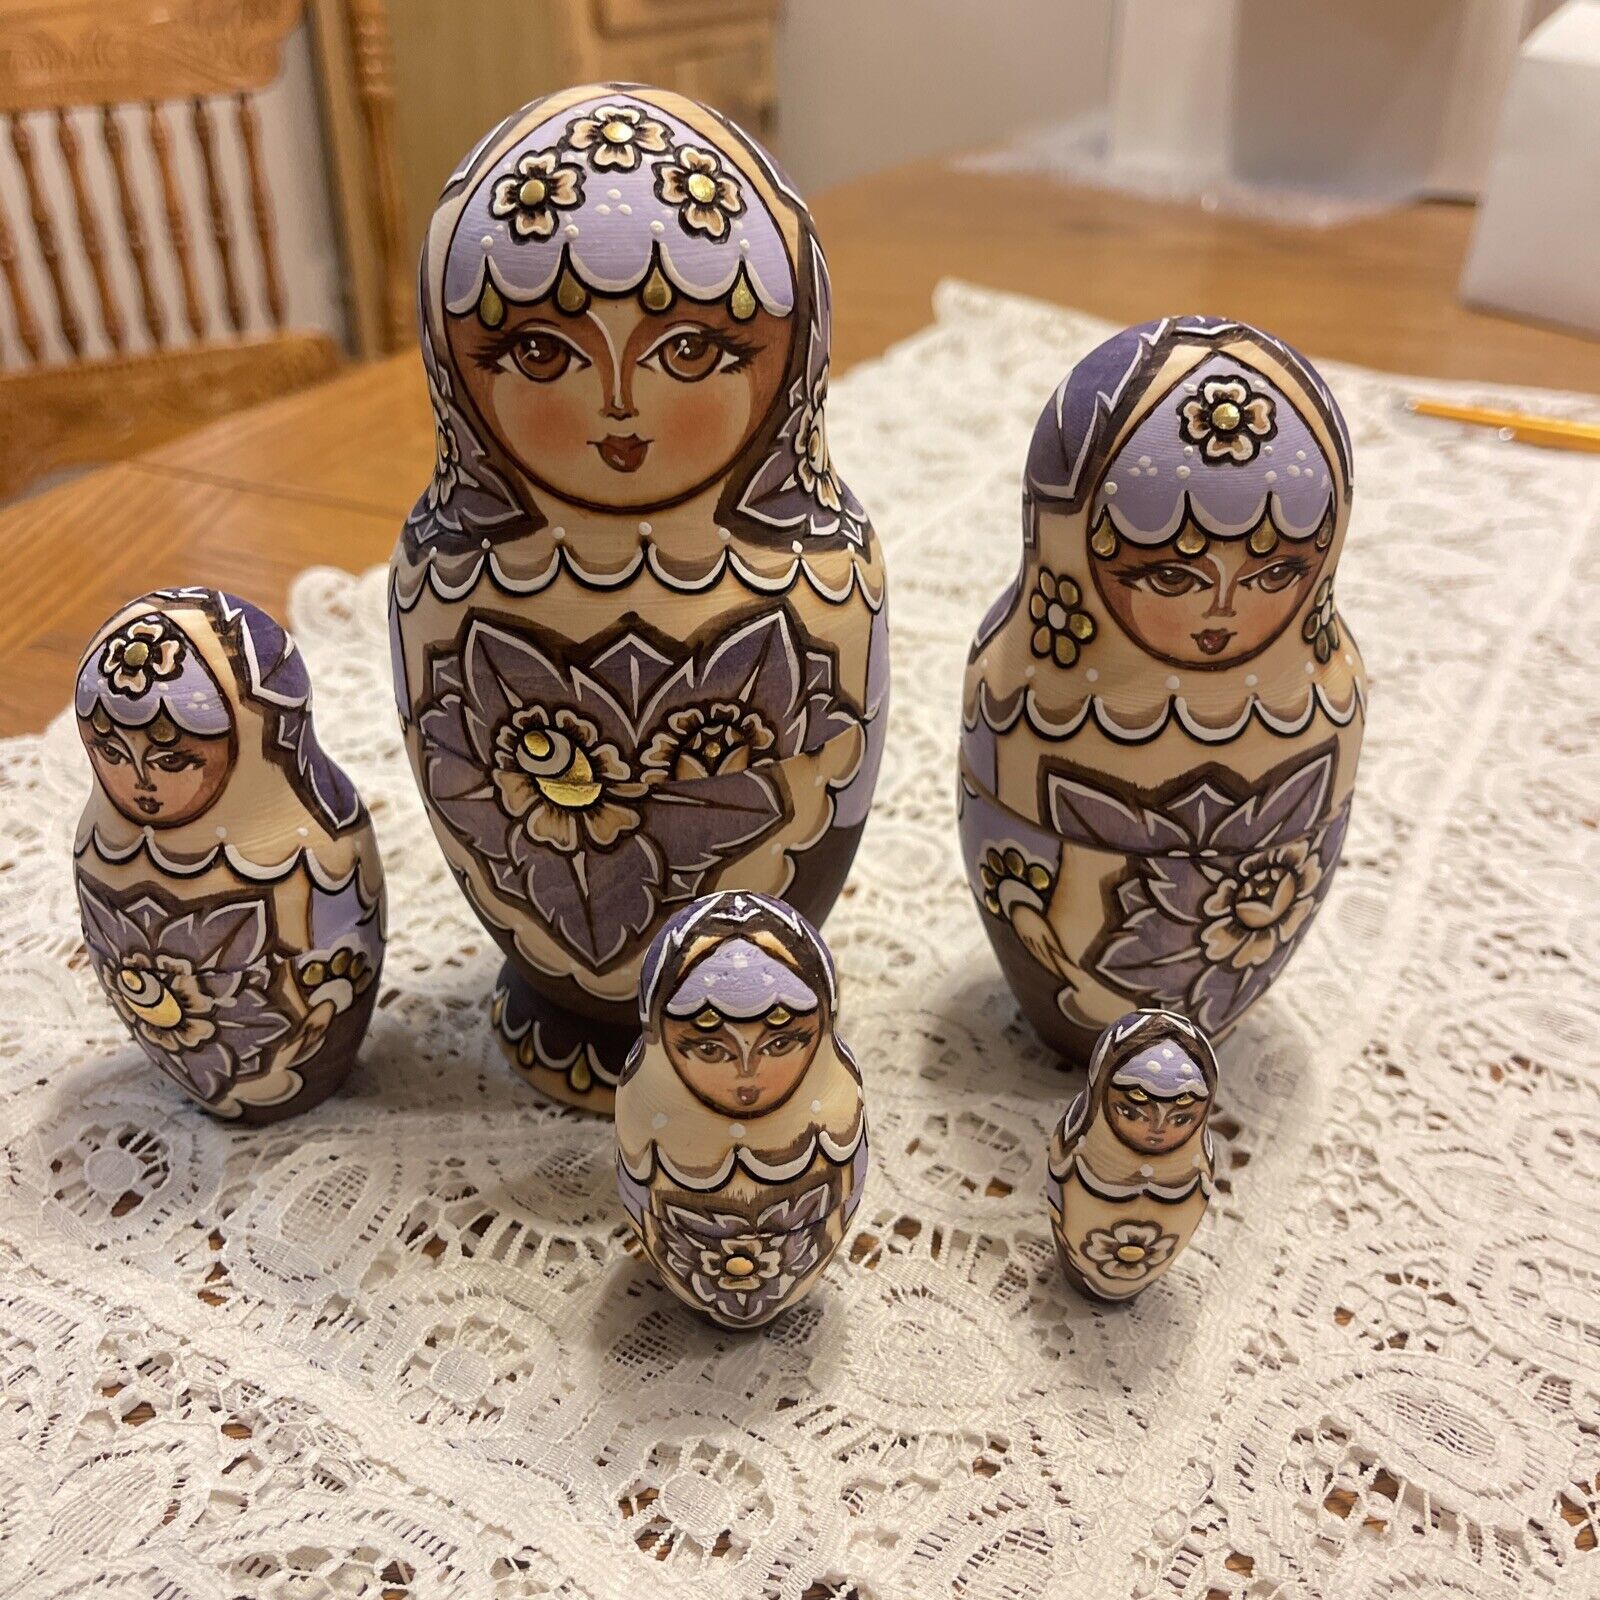 Russian Matryoshka Purple and Gold Nesting Dolls - 5 Pieces - So Cute